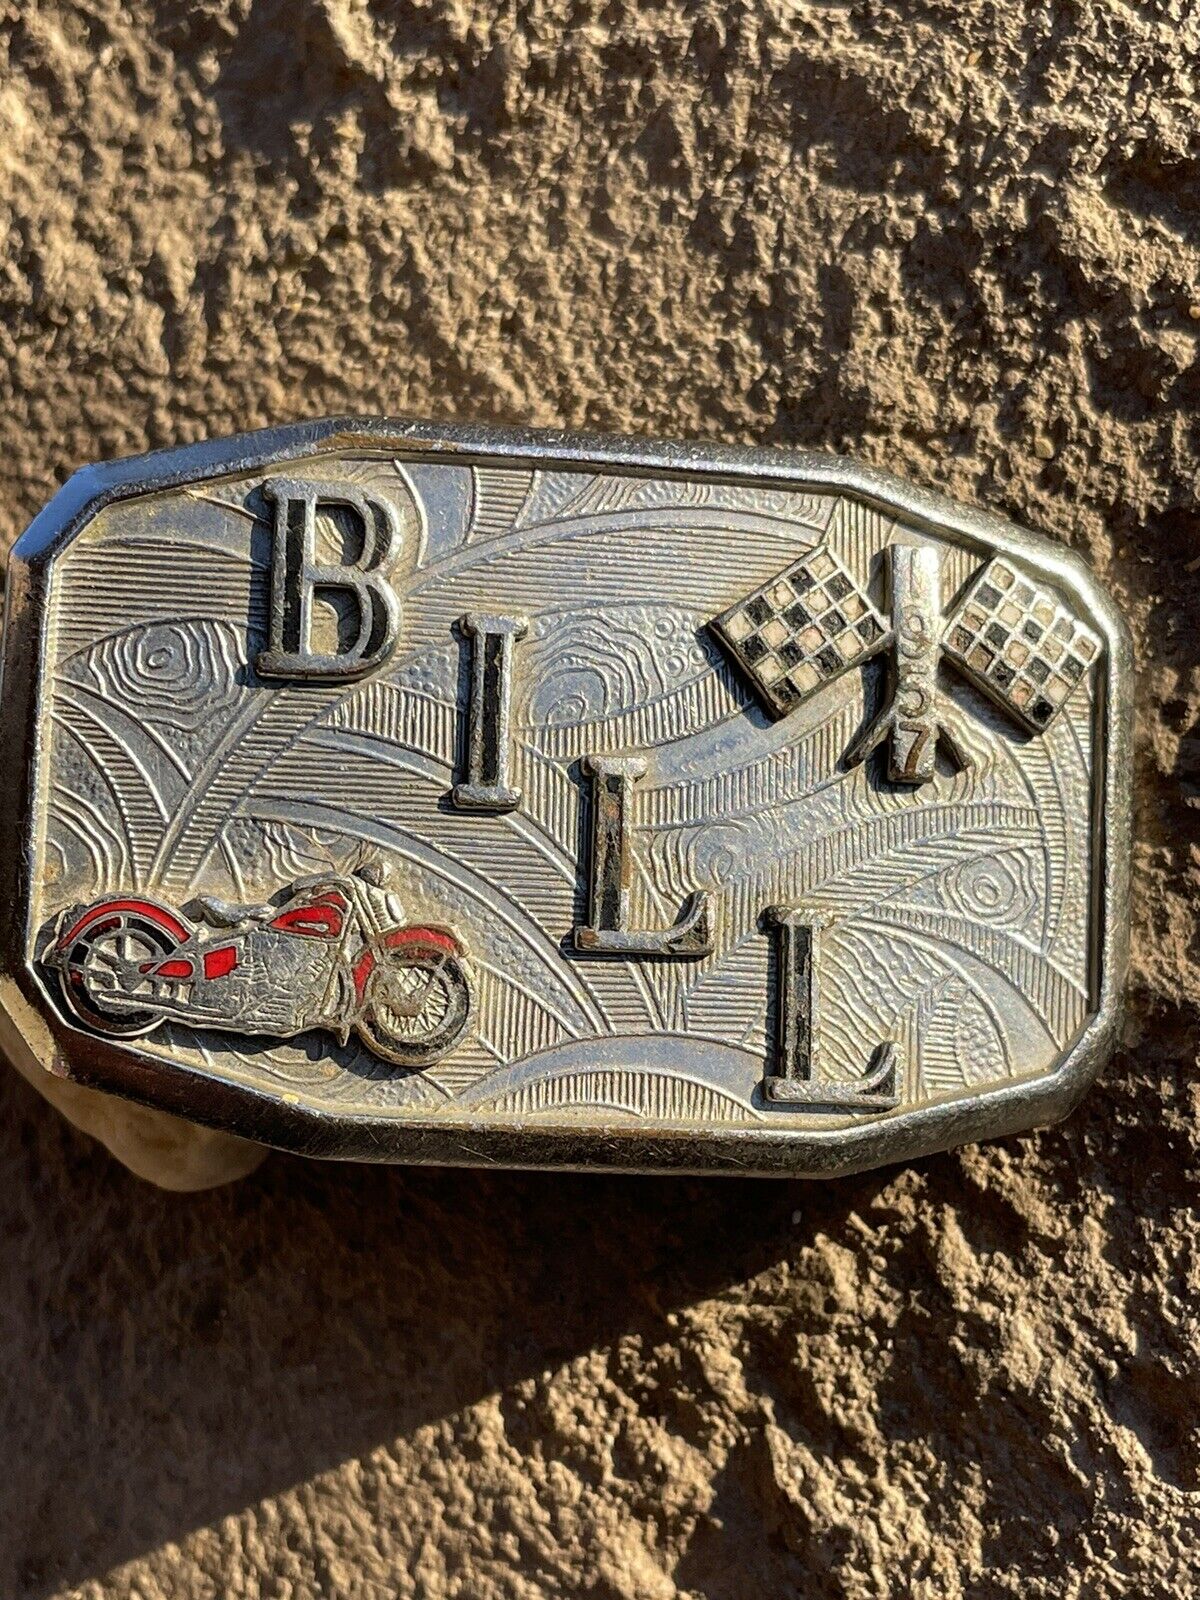 Harley Davidson 1957 Belt Buckle BILL Motorcycle Club Vintage Biker Old